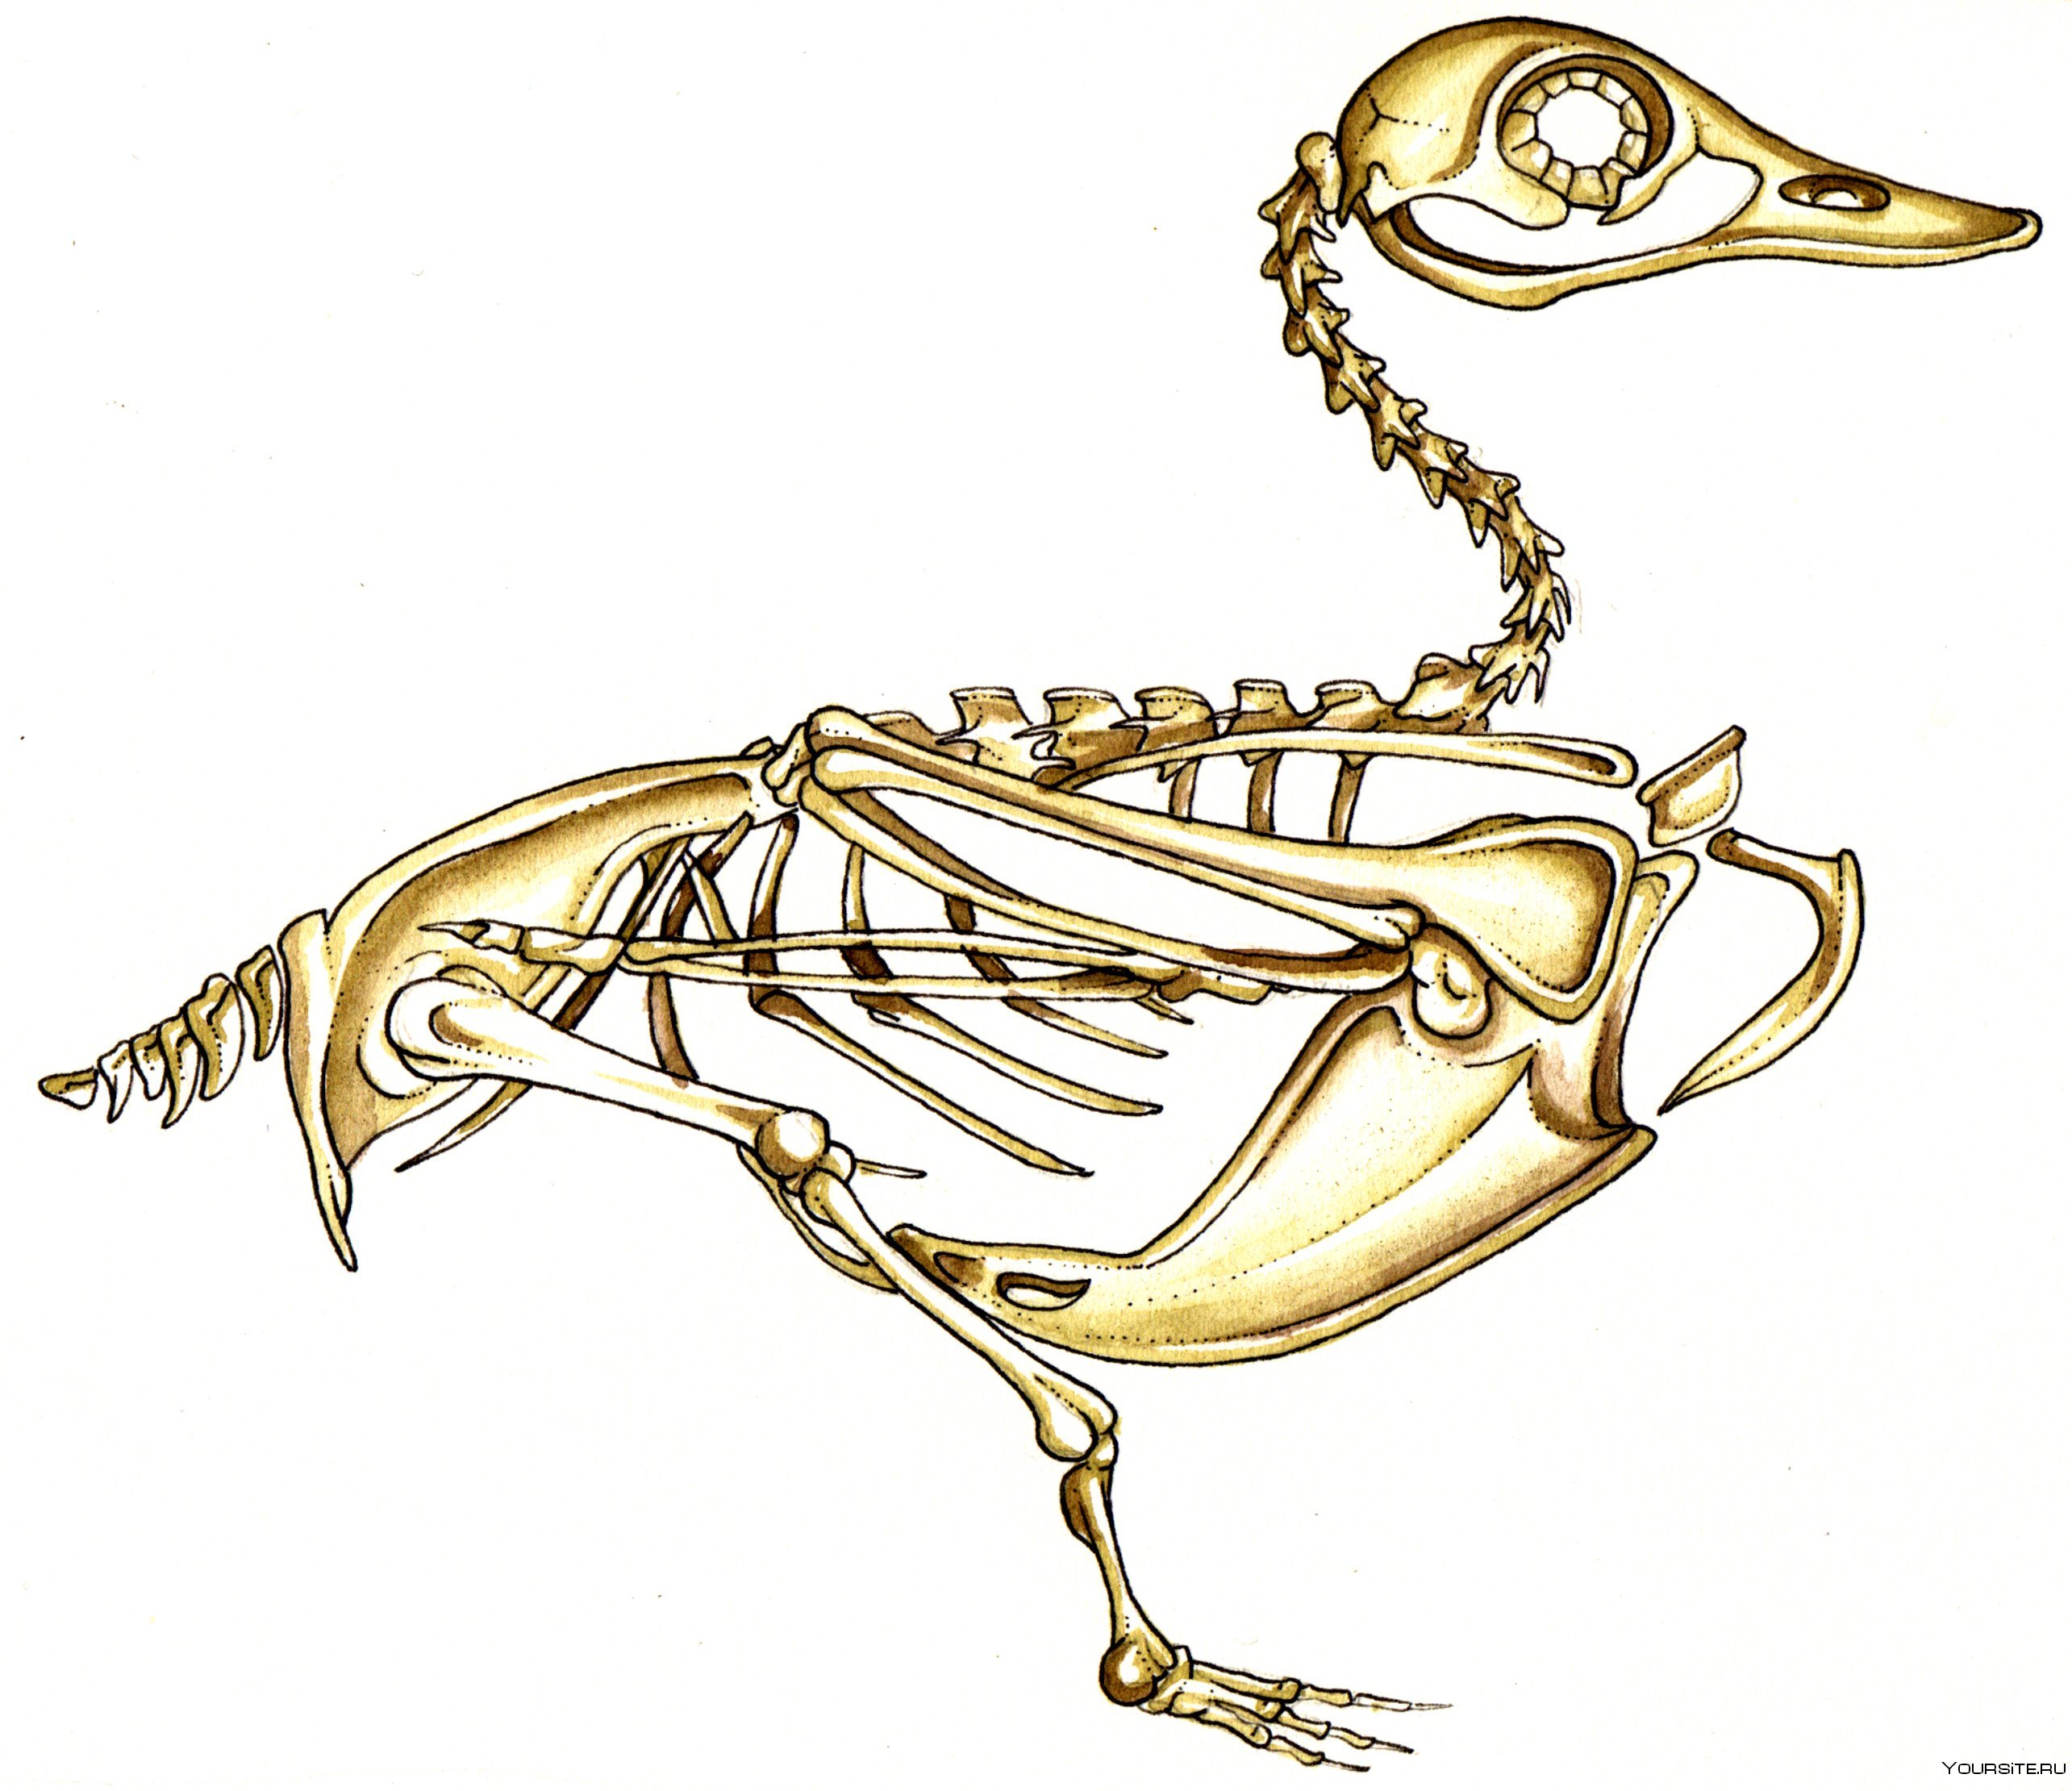 На рисунке изображен скелет птицы. Скелет кряквы утки. Анатомия скелета гуся. Строение скелета утки кряквы. Скелет птицы анатомия.